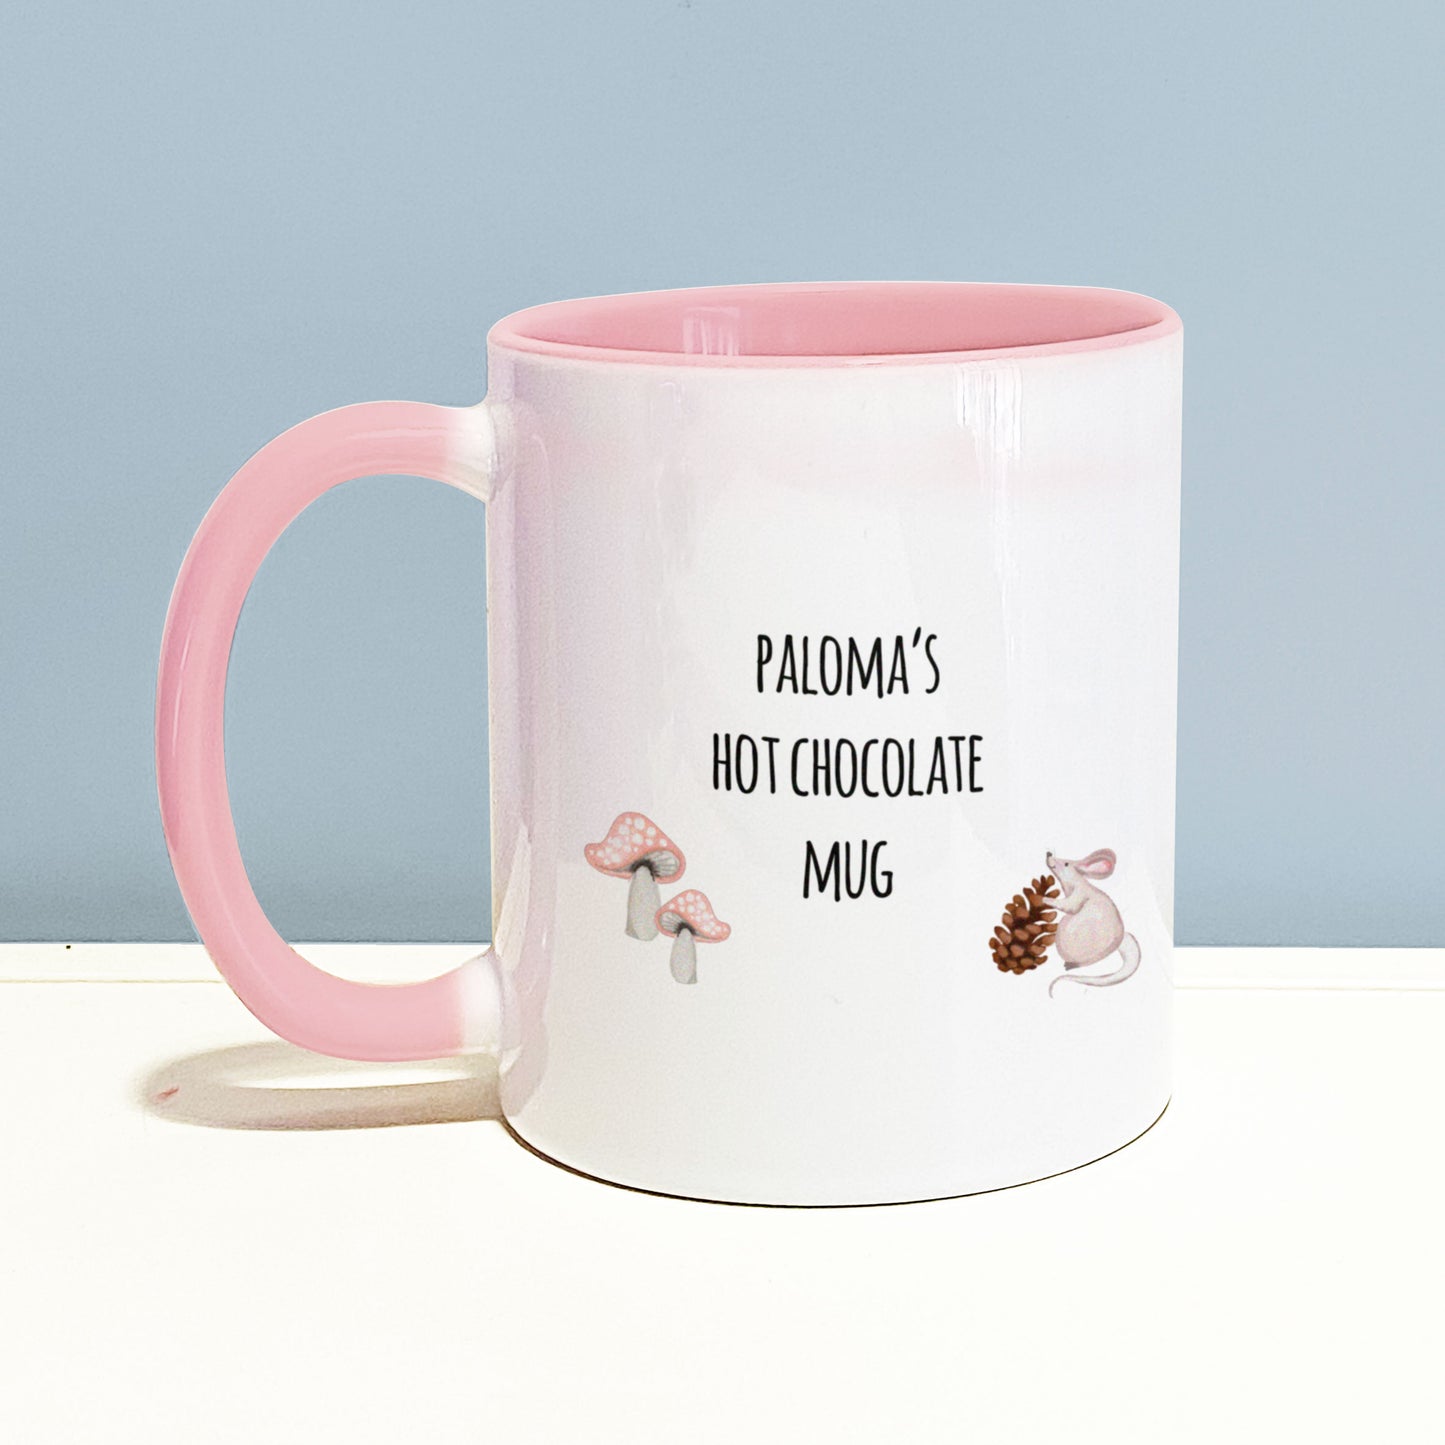 Pretty Pumpkin Personalised Mug. Halloween mug. Cute pink handle mug. Personalised ceramic mug. Hello Pumpkin Mug.